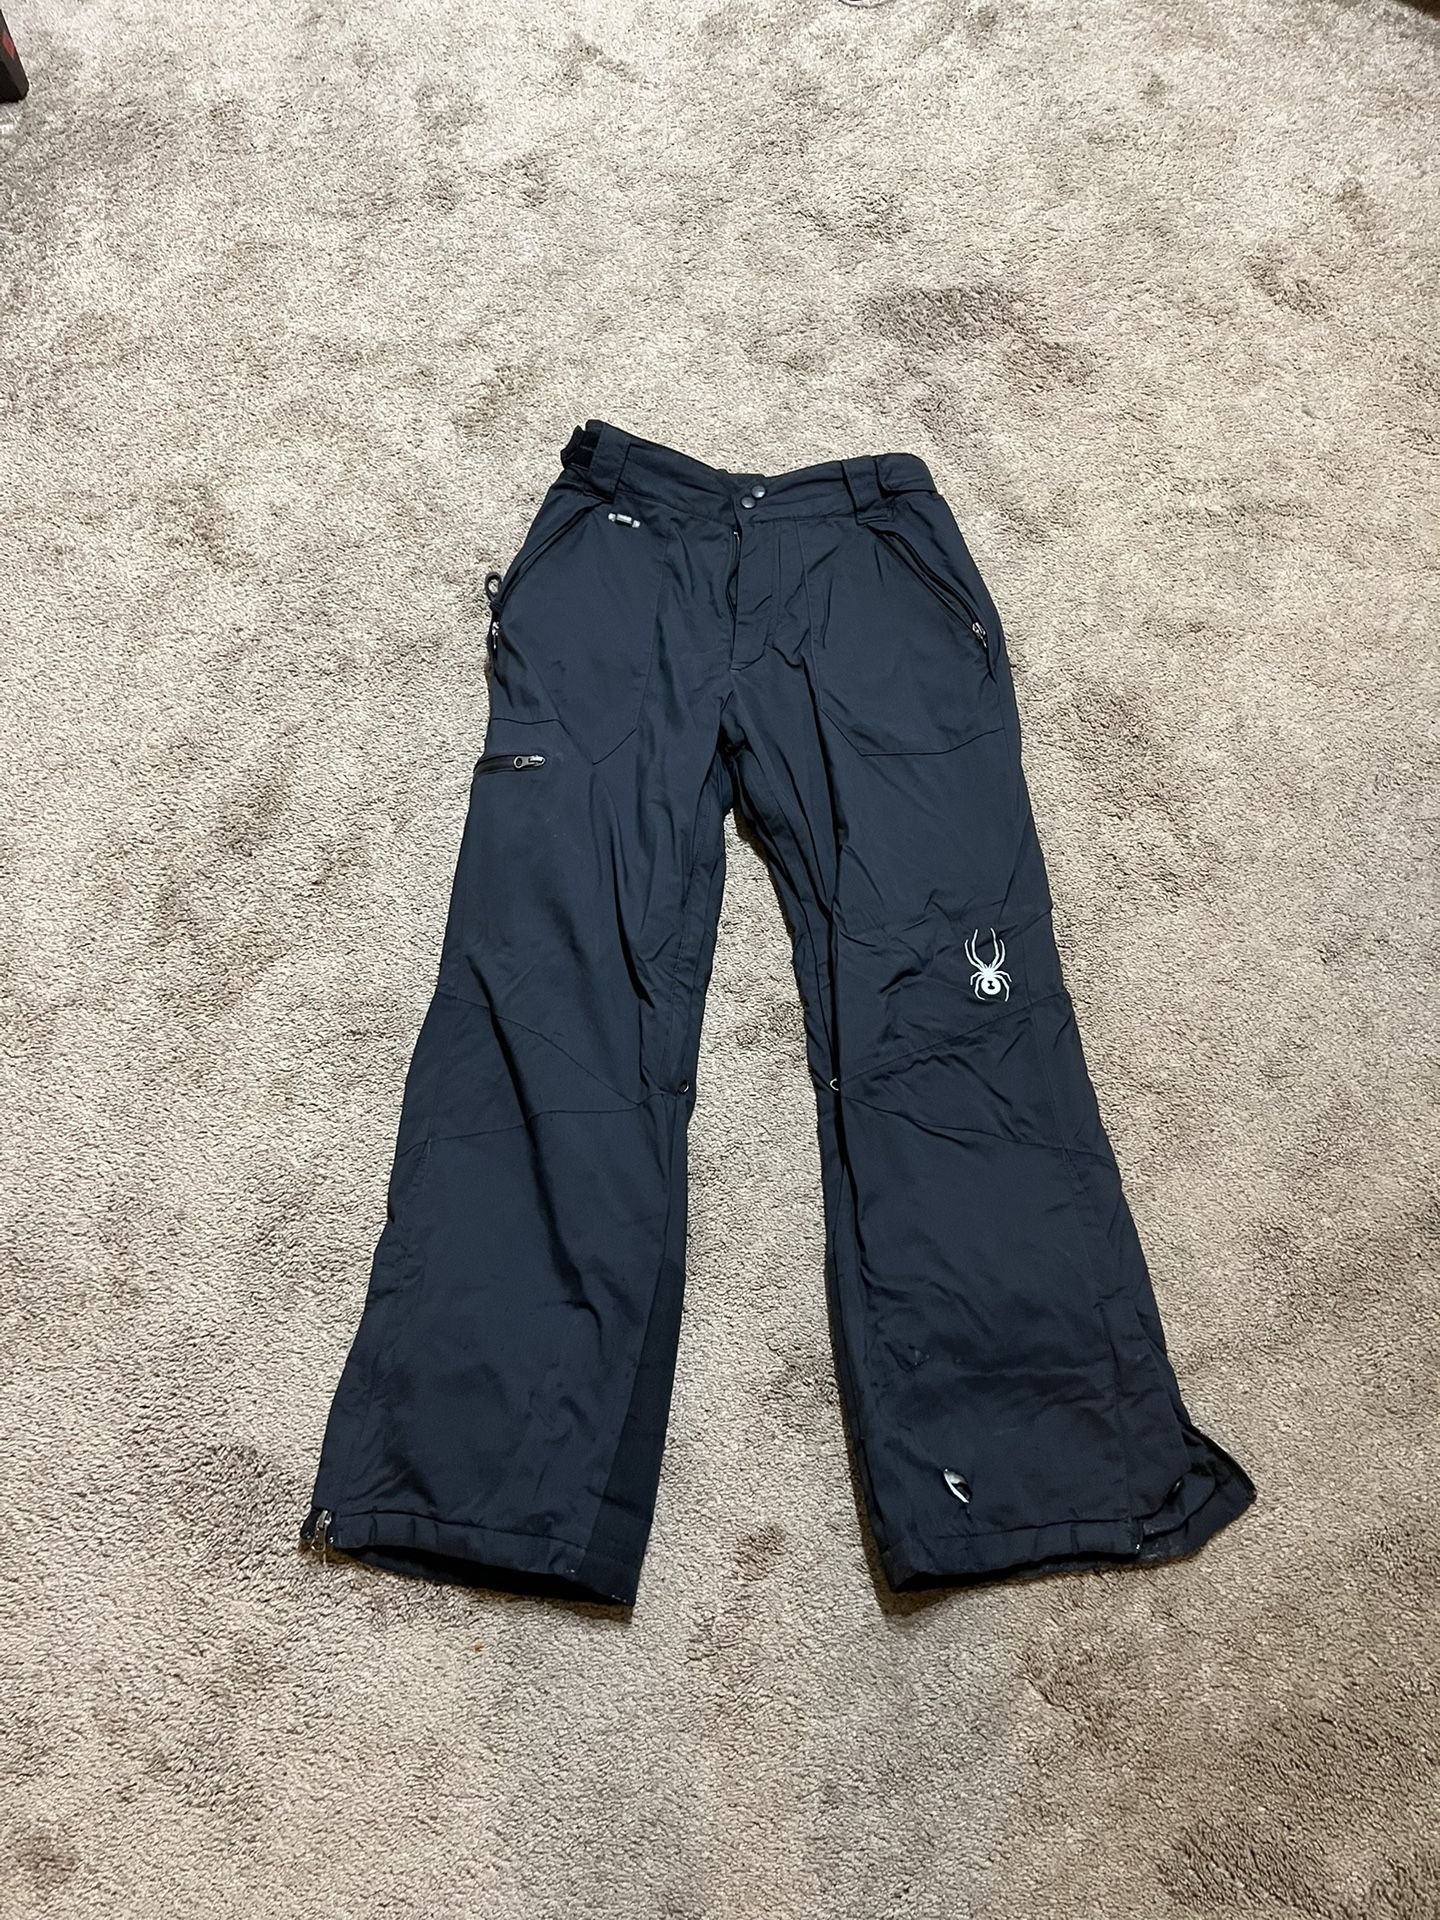 Men’s Ski/snow Pants M for Sale in Seattle, WA - OfferUp